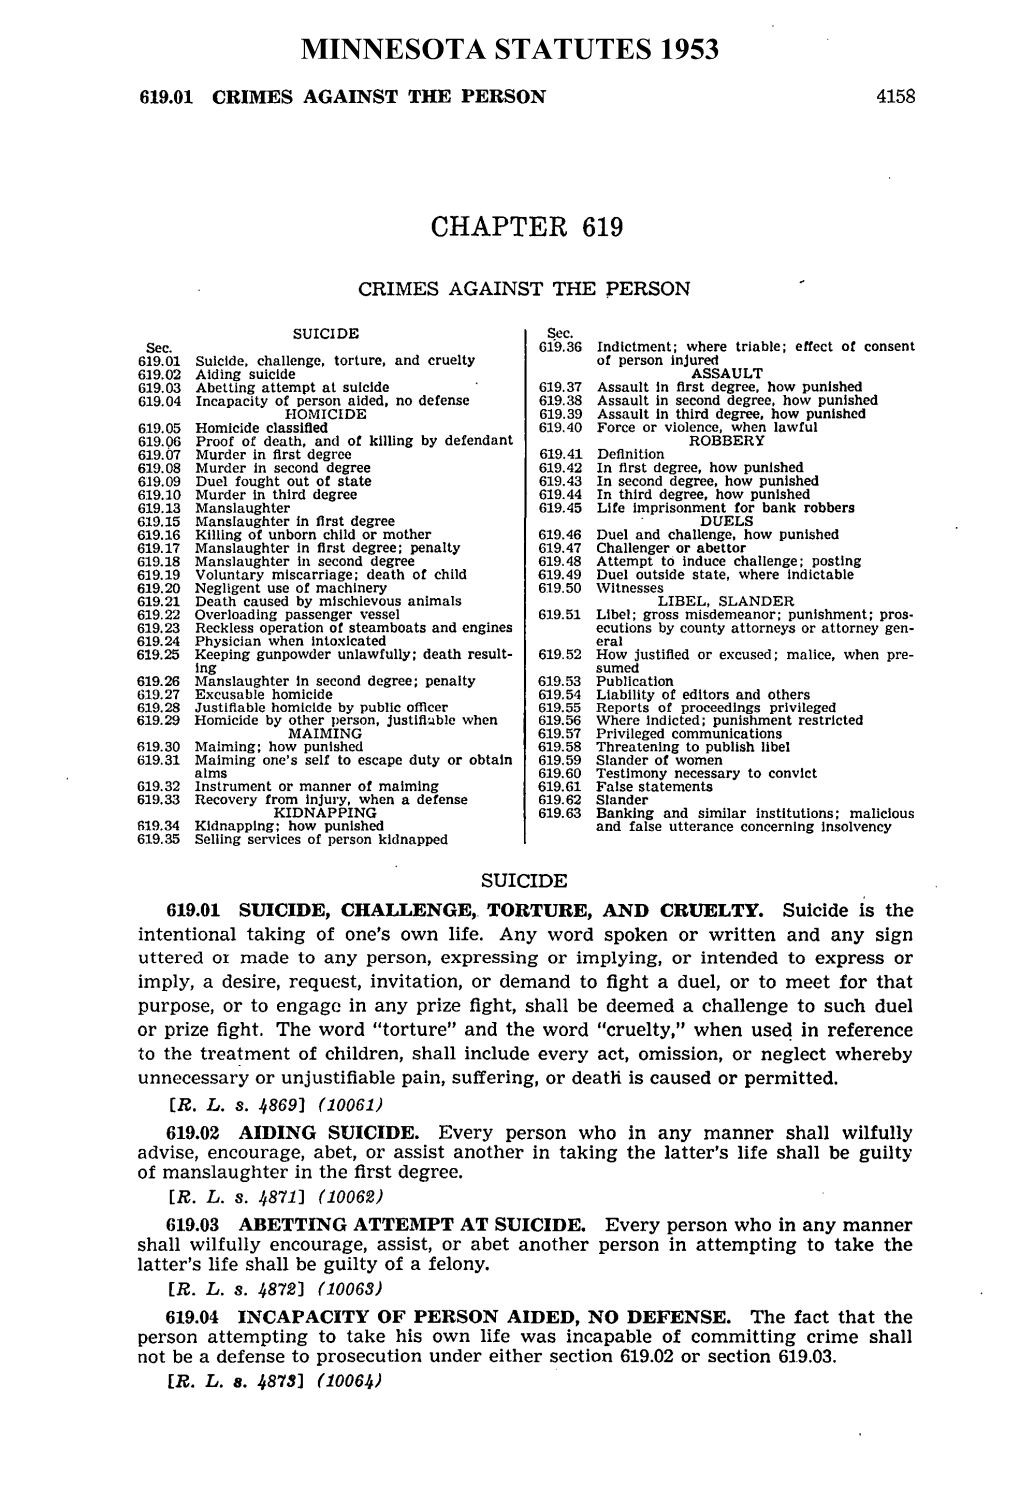 Chapter 619 Minnesota Statutes 1953